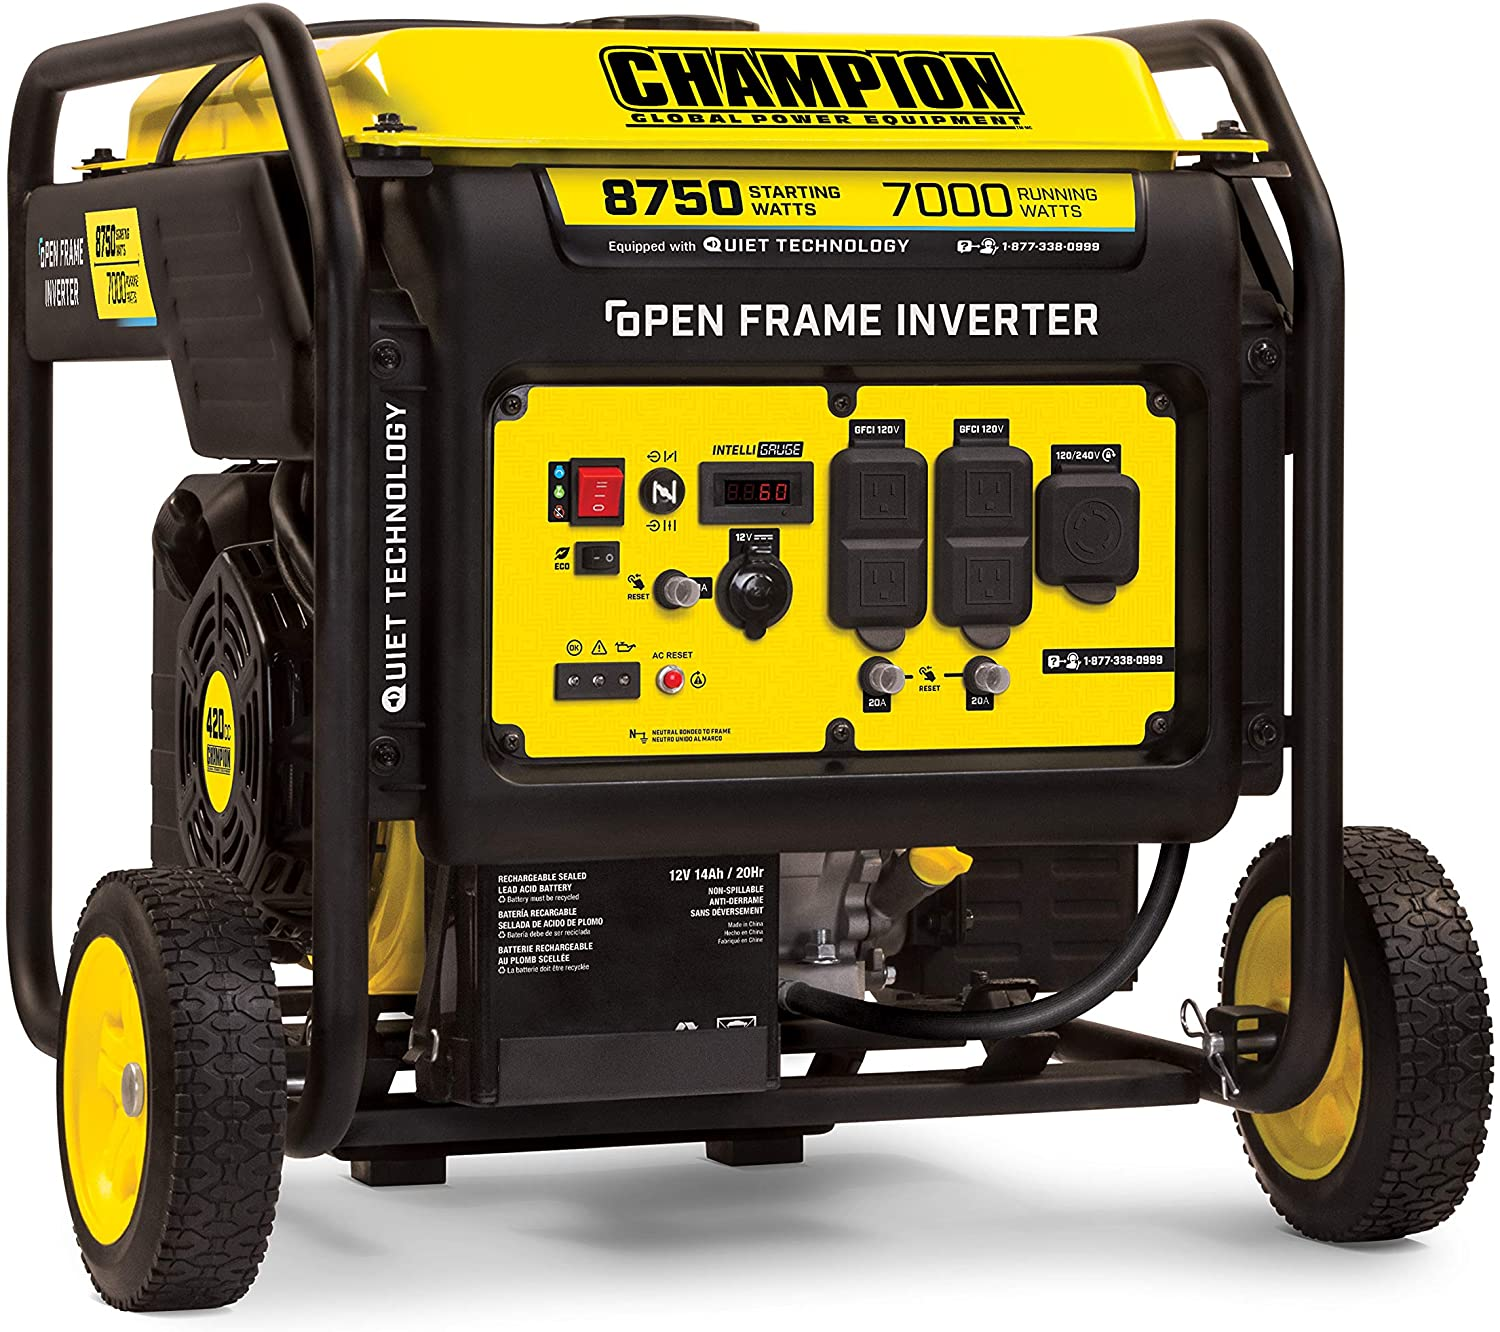 Champion 8750W Inverter Generator $1005